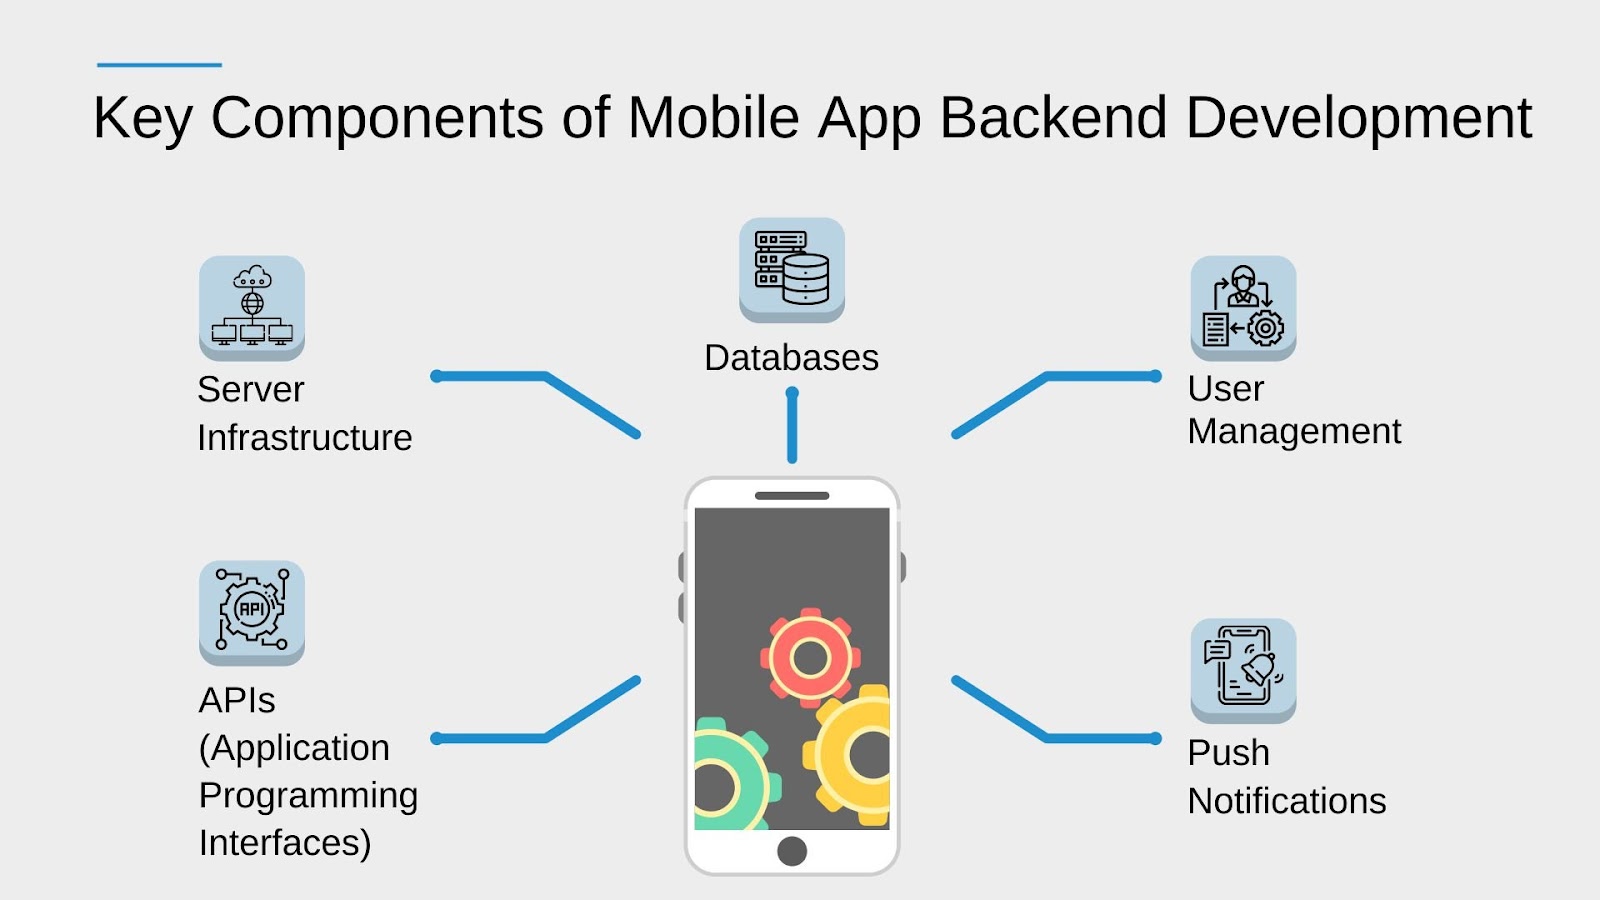 Mobile app back-end development components